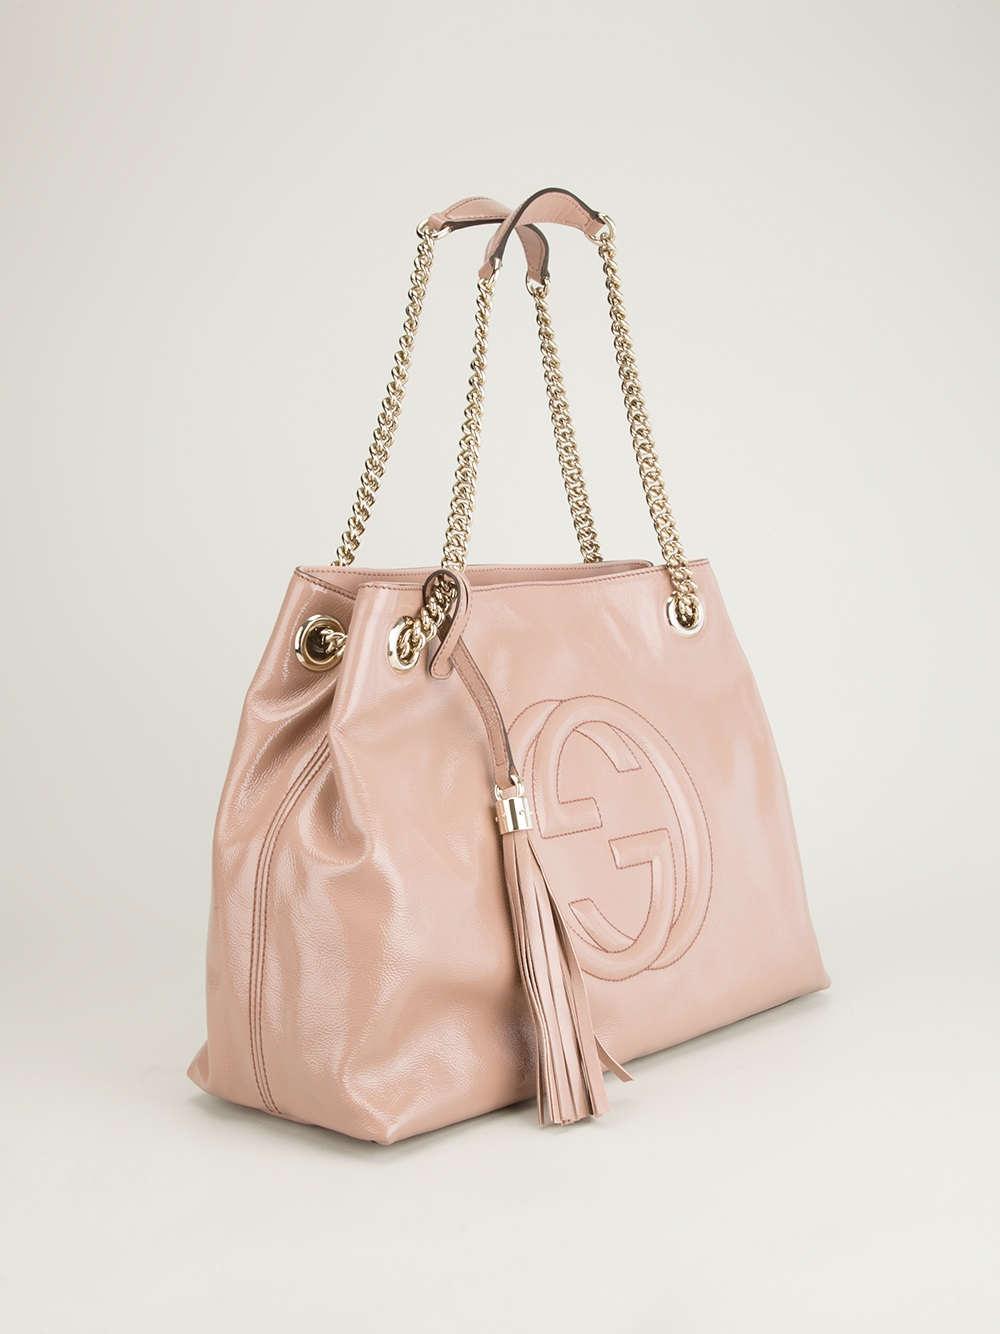 Gucci Embossed Logo Tote Bag in Pink & Purple (Pink) - Lyst